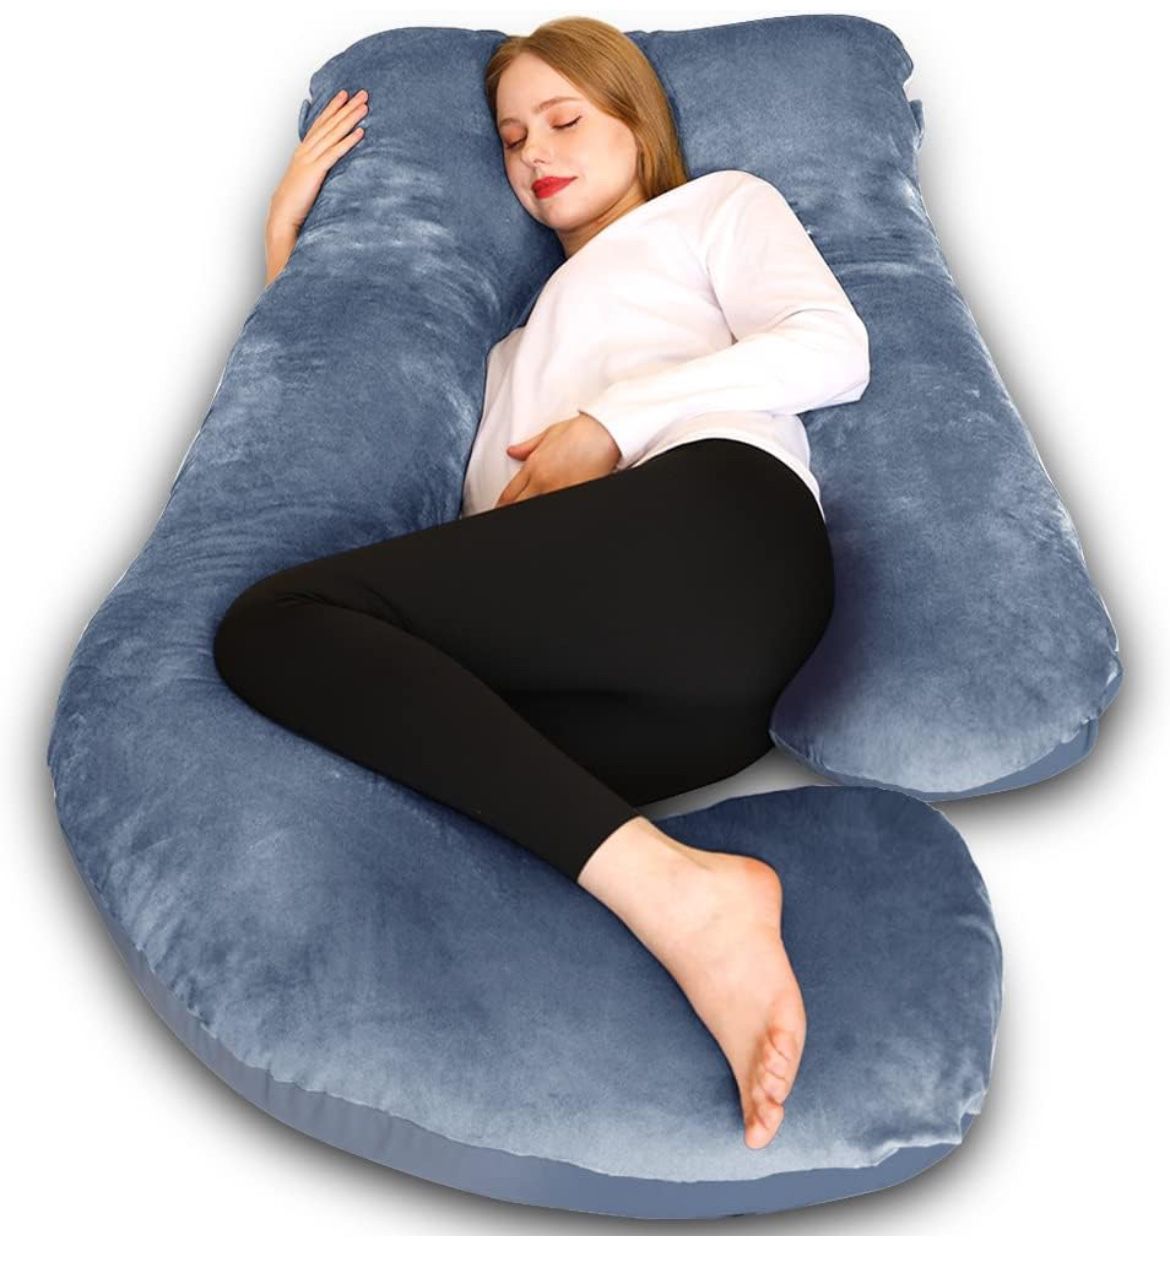  Home Pregnancy Pillow